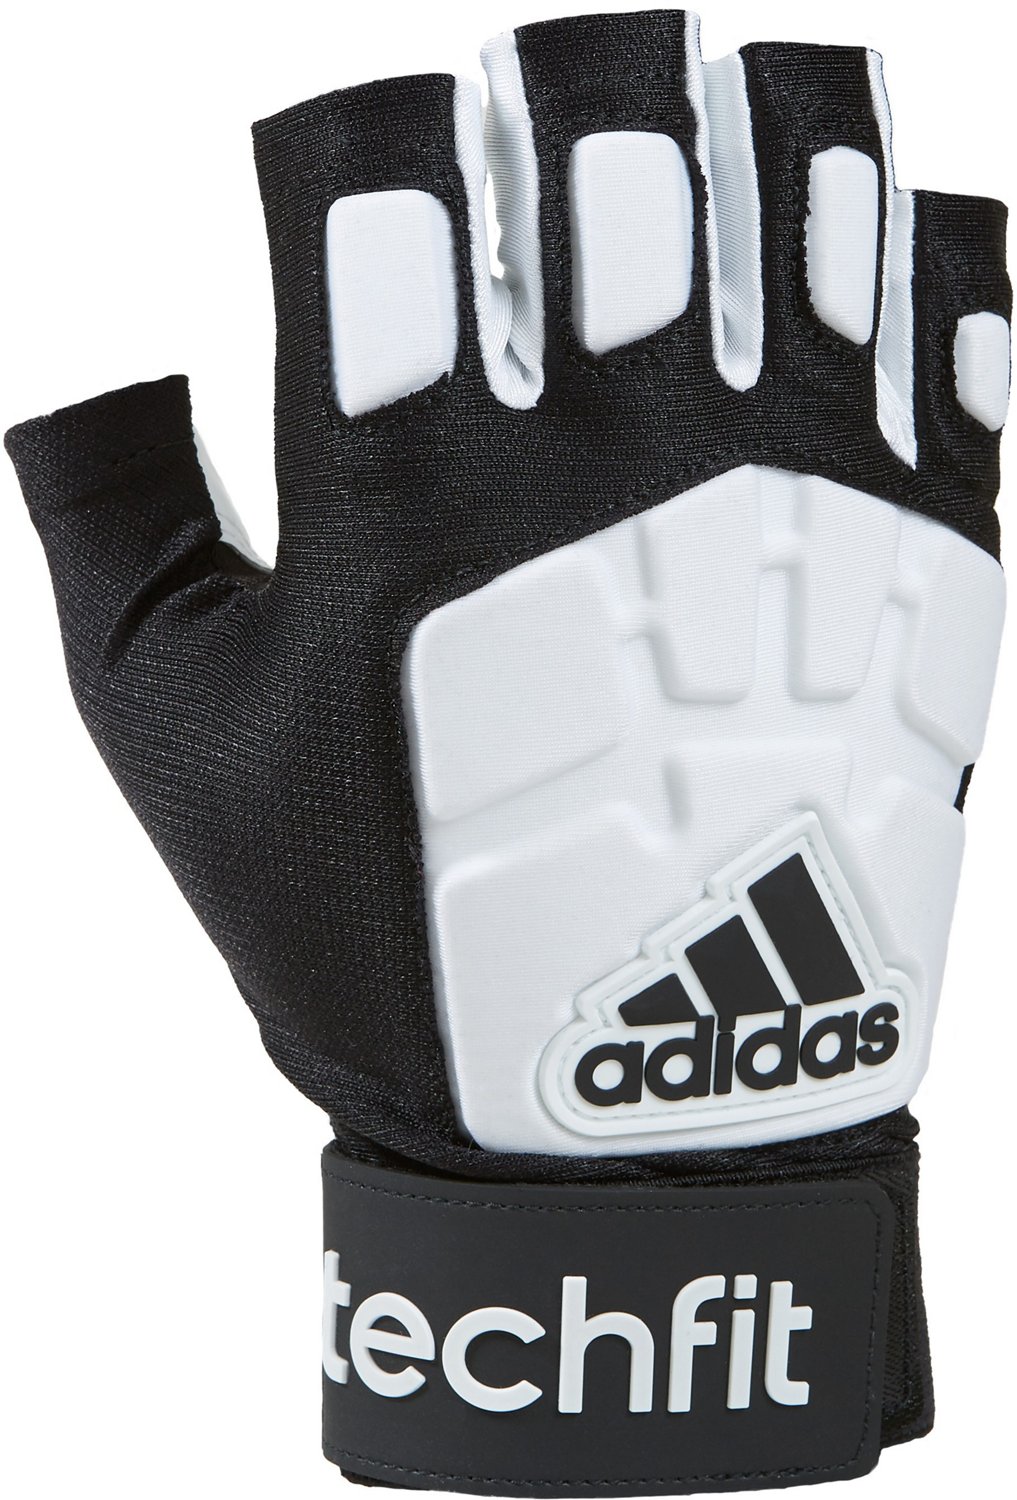 adidas techfit gloves